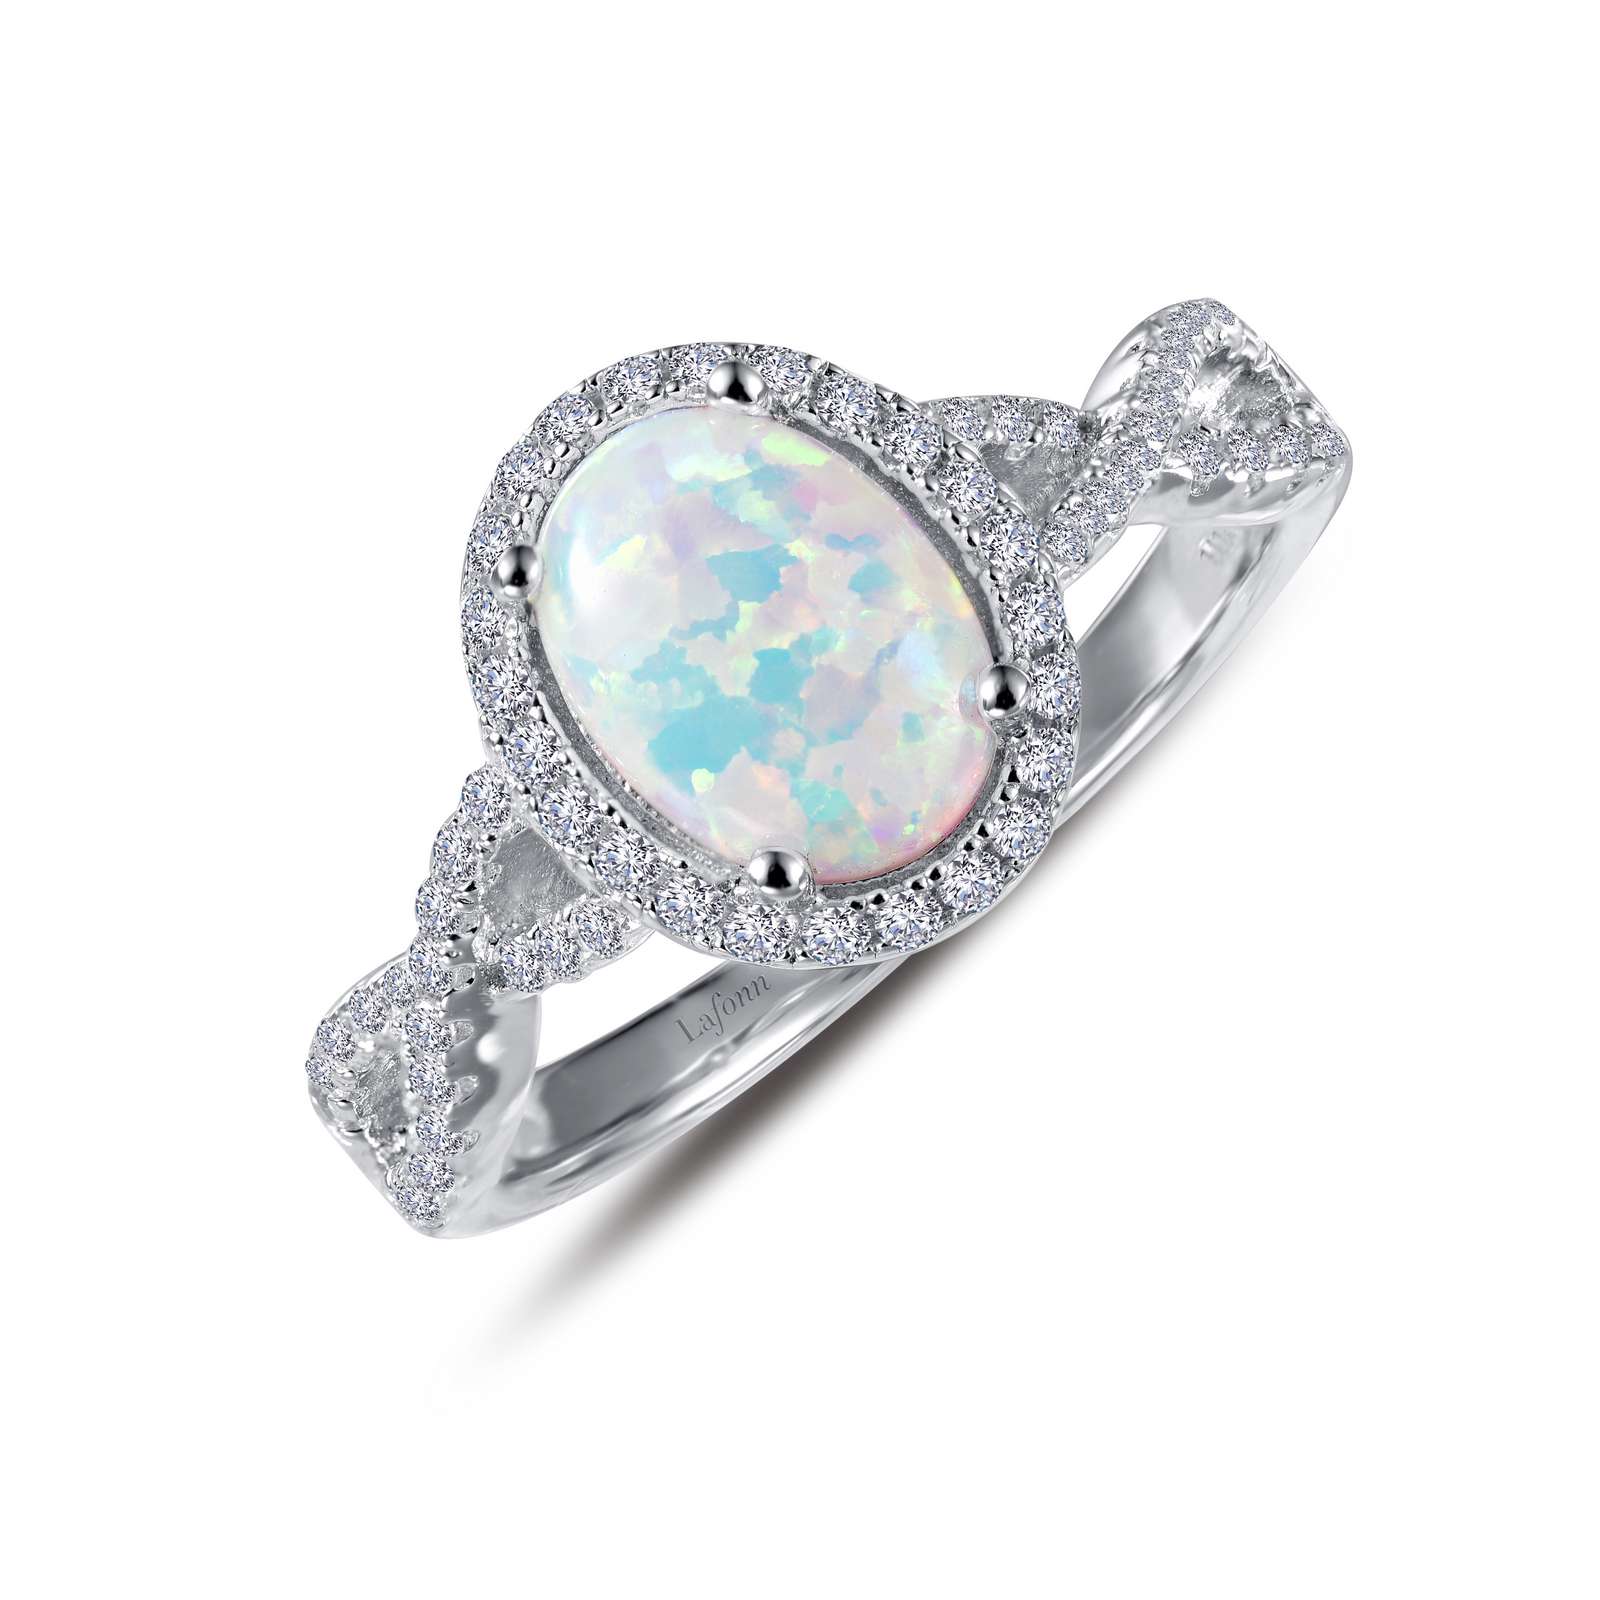 Halo Engagement Ring Diamond Shop Ada, OK